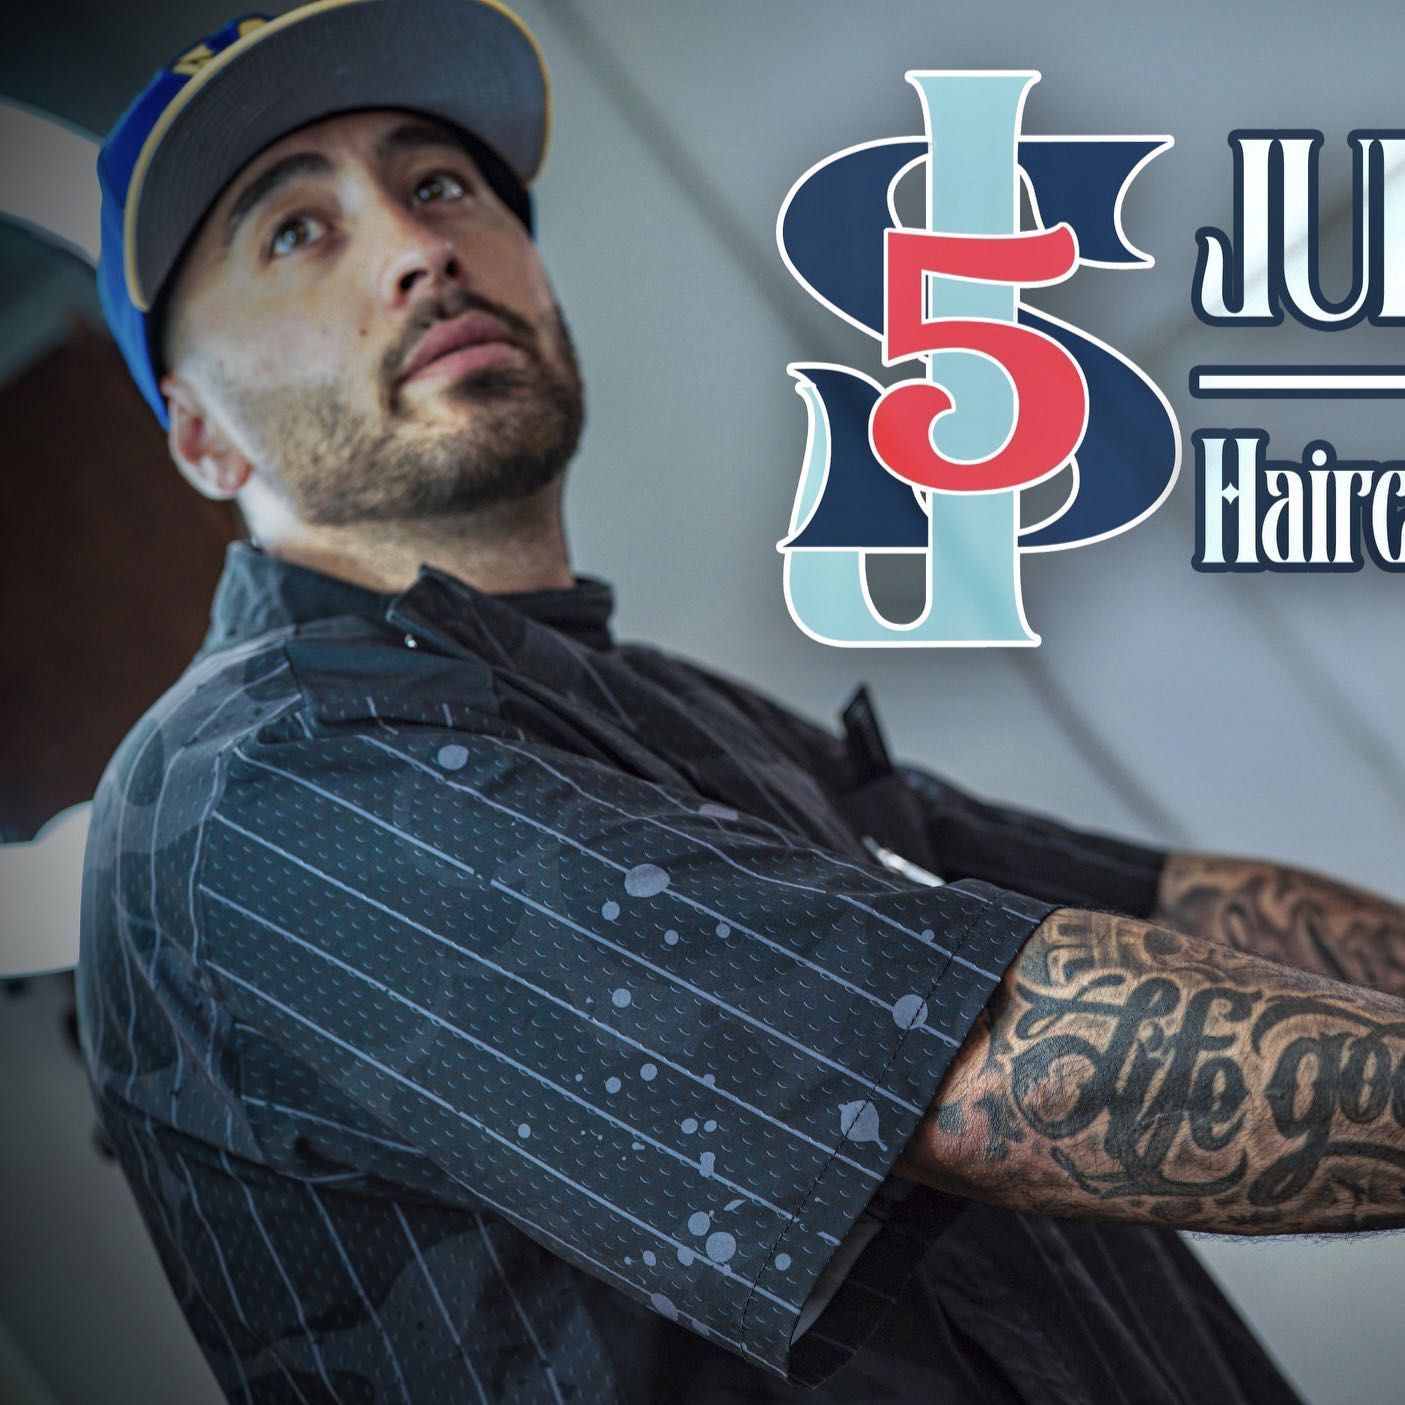 Barber Julio -The Chop Shop, Main St, 471, Watsonville, 95076